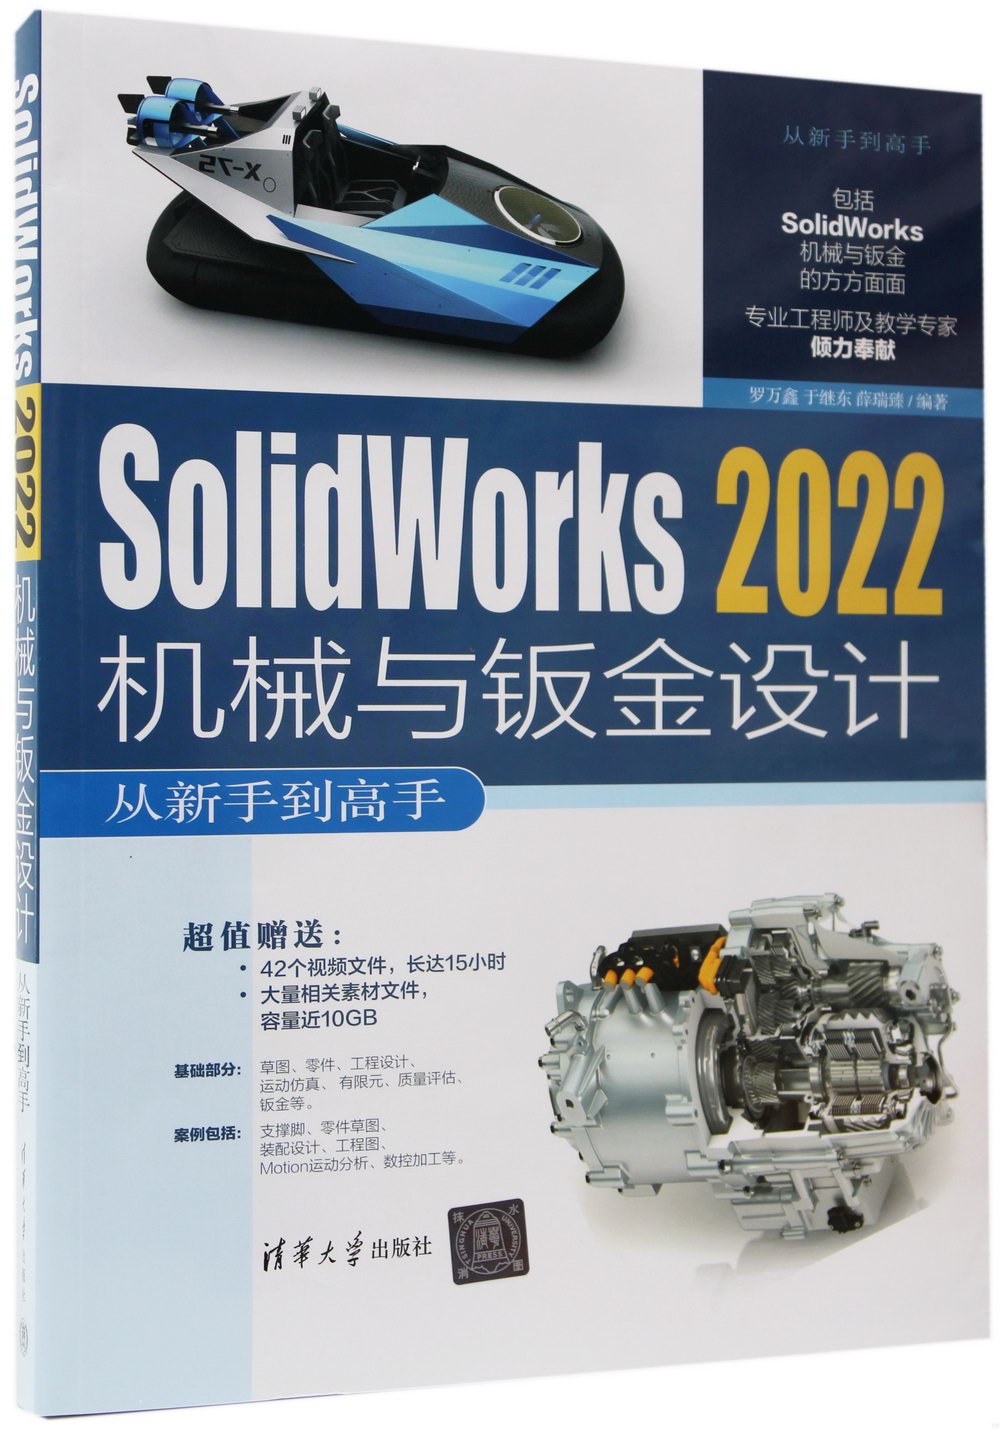 Solidworks 2022機械與鈑金設計從新手到高手